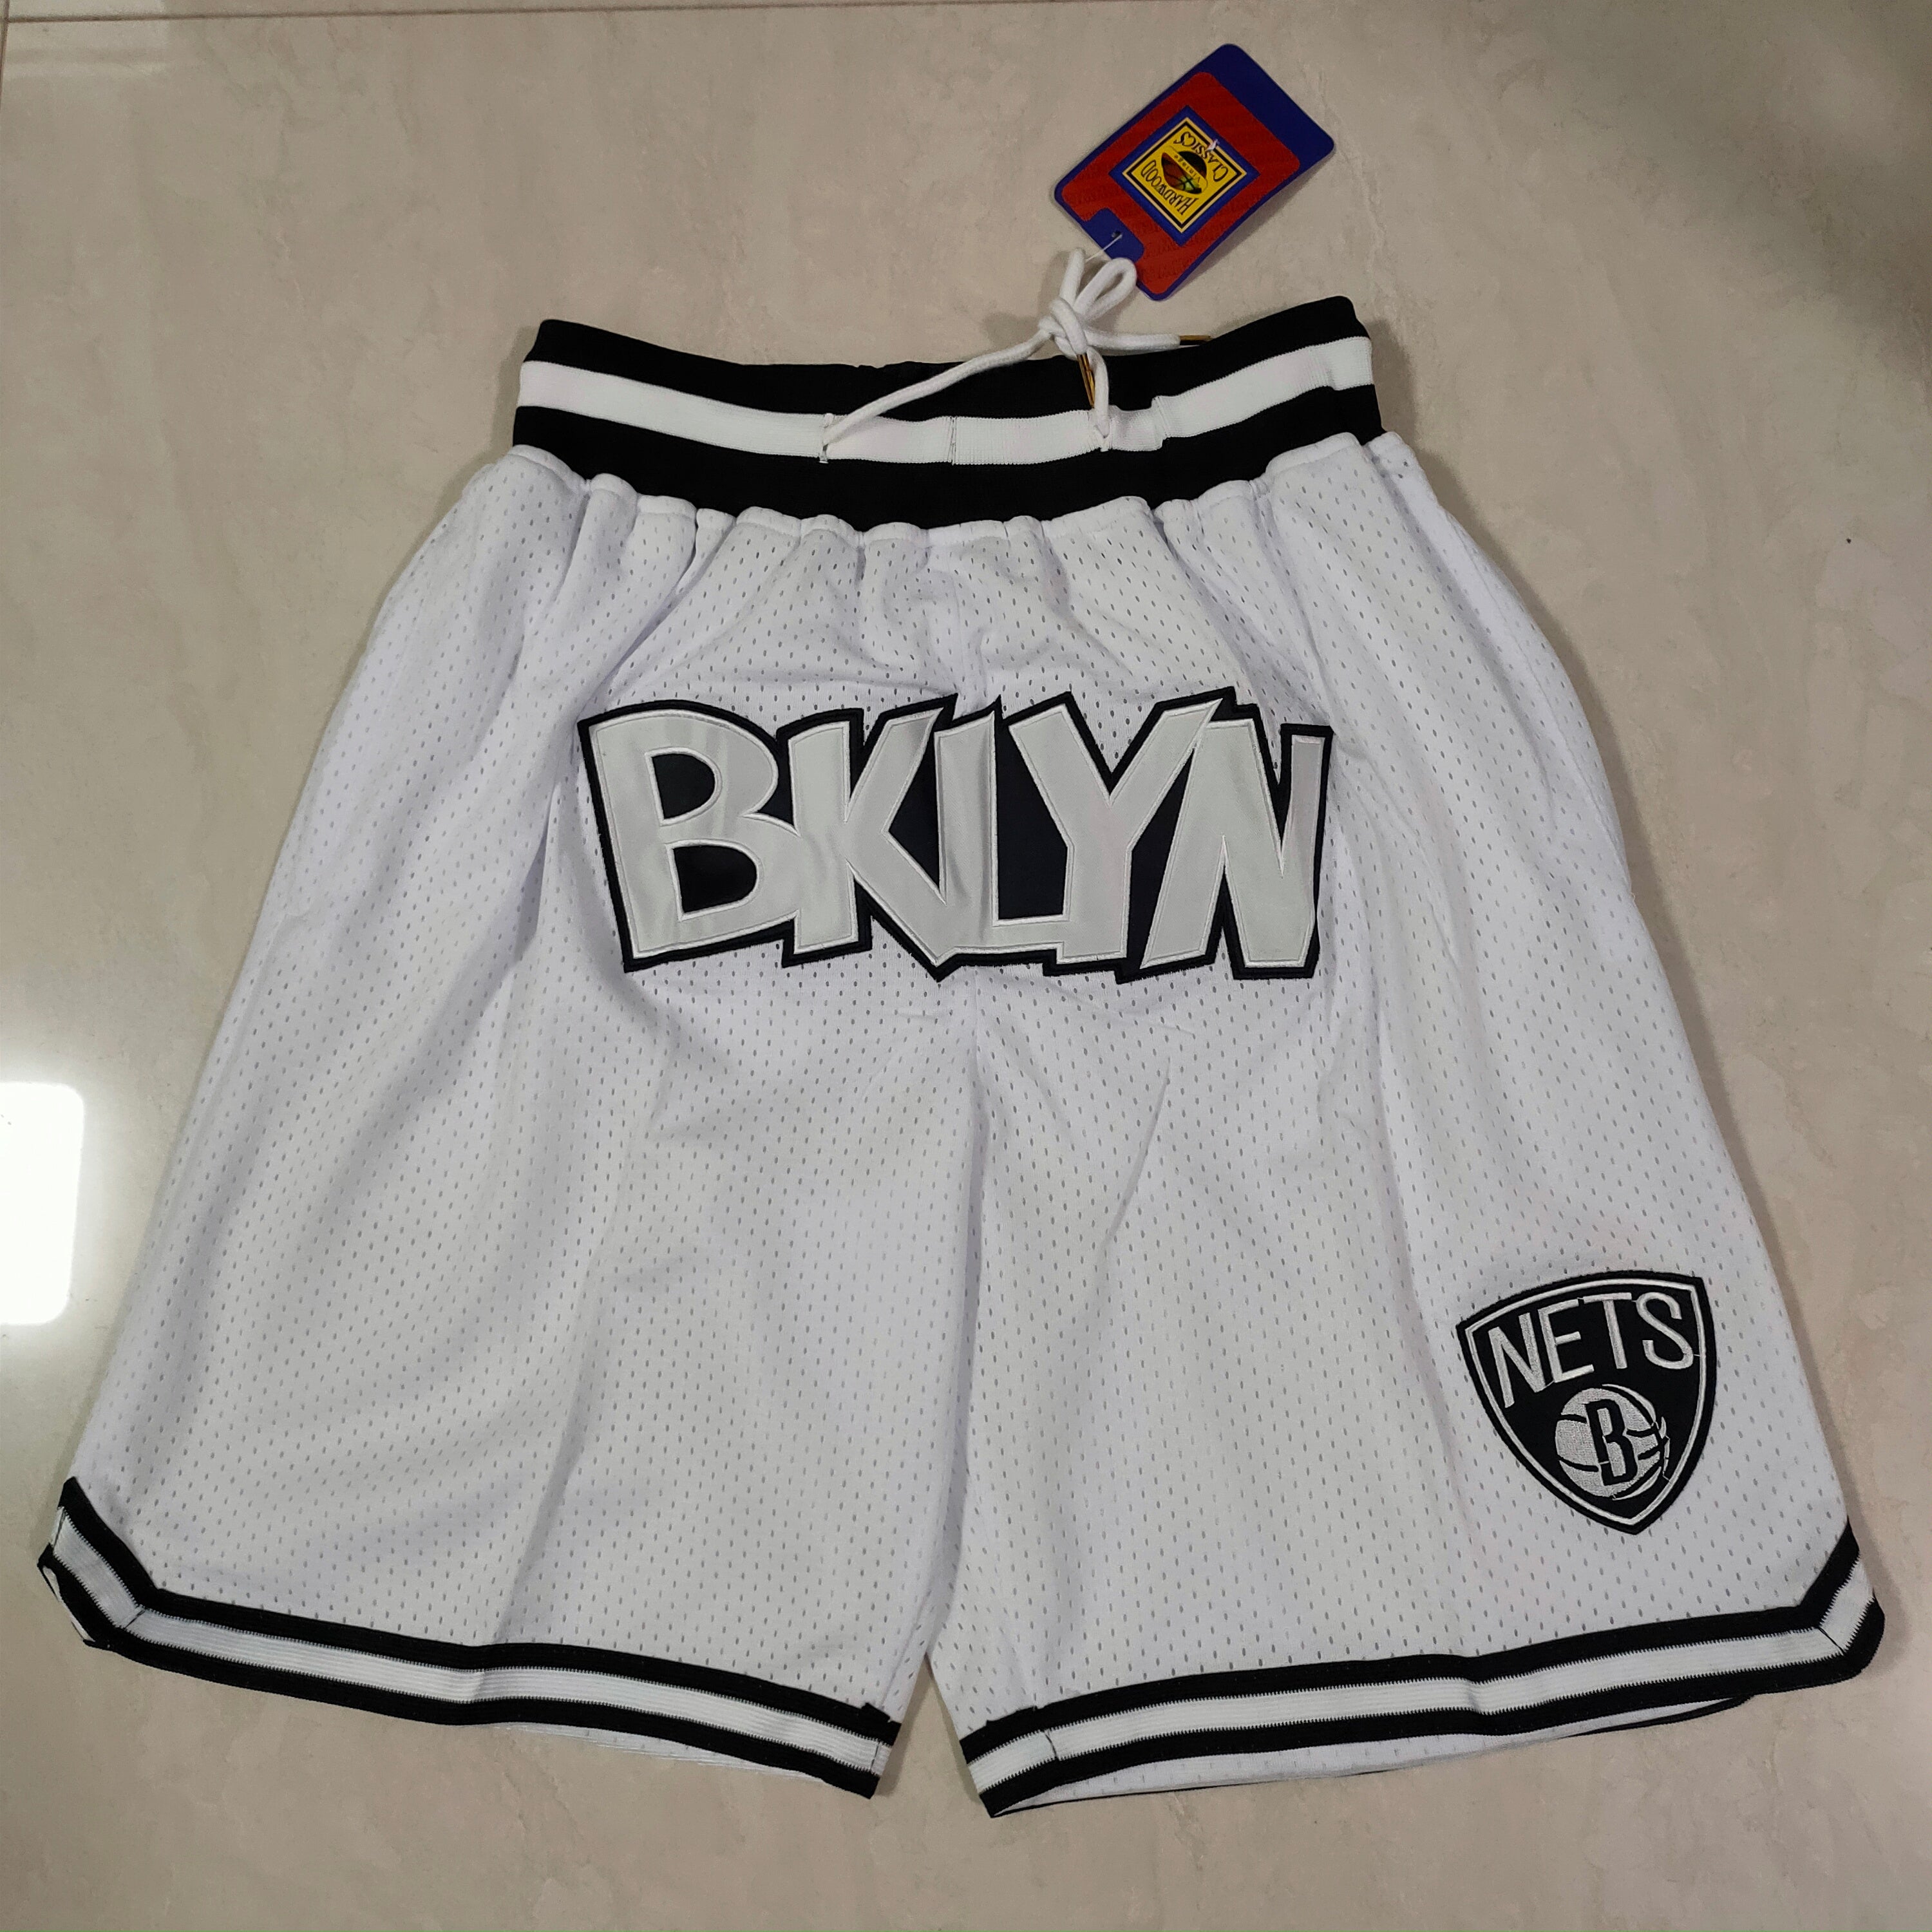 Brklyn nets black and white shorts